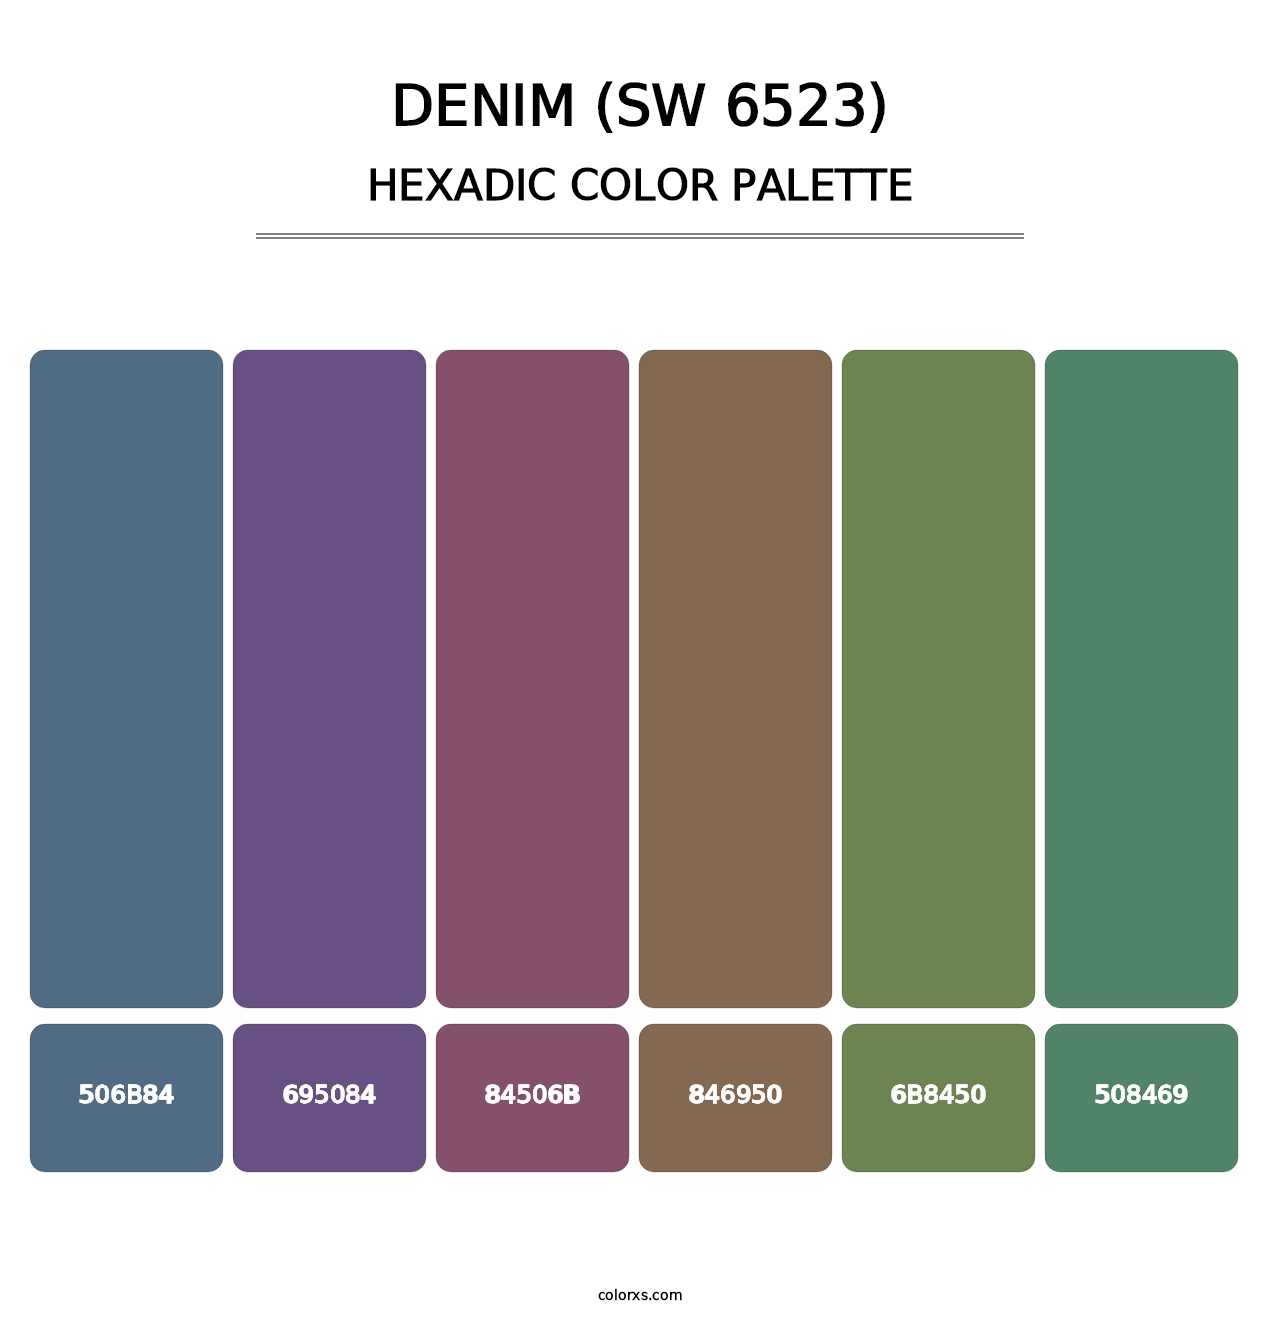 Denim (SW 6523) - Hexadic Color Palette